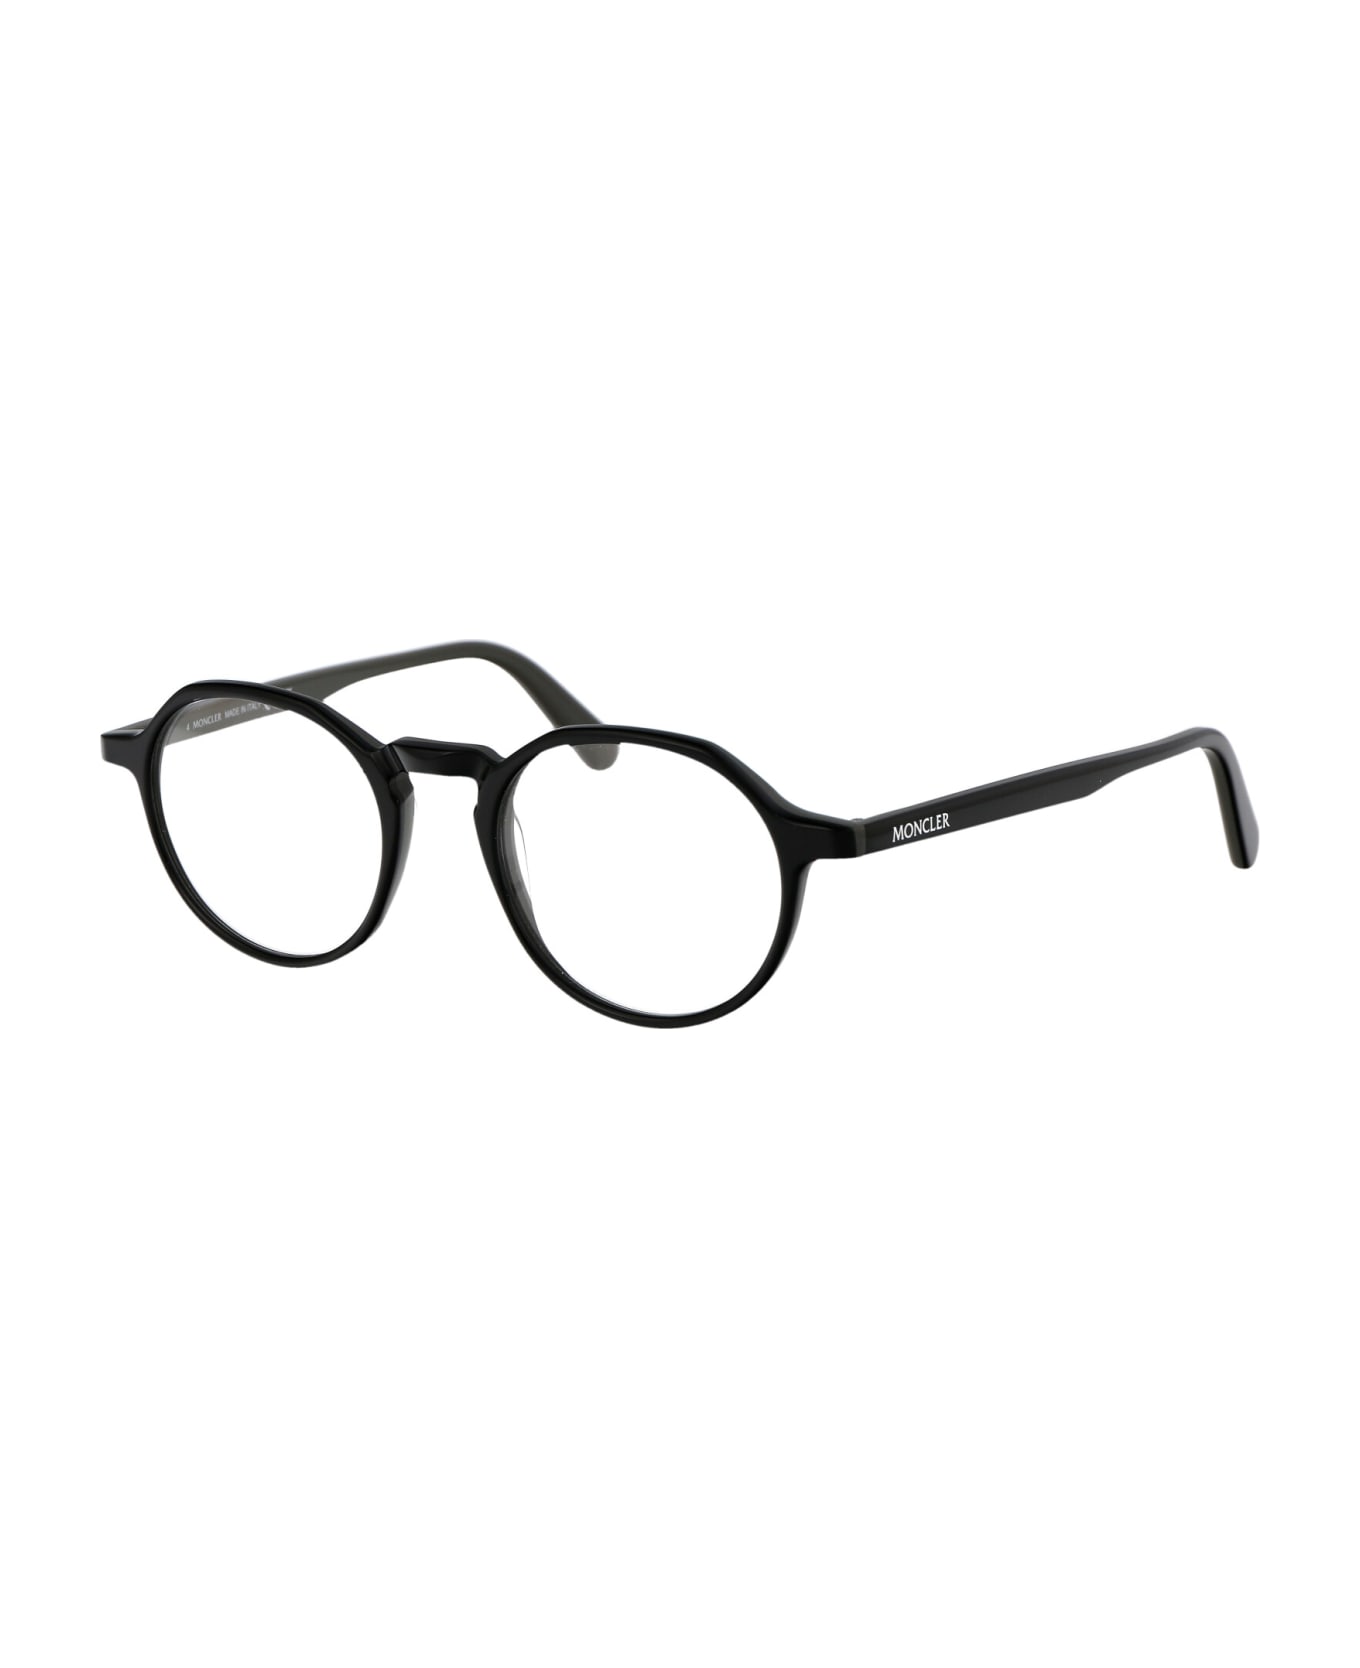 Moncler Eyewear Ml5120 Glasses - 005 Nero/Monocolore アイウェア